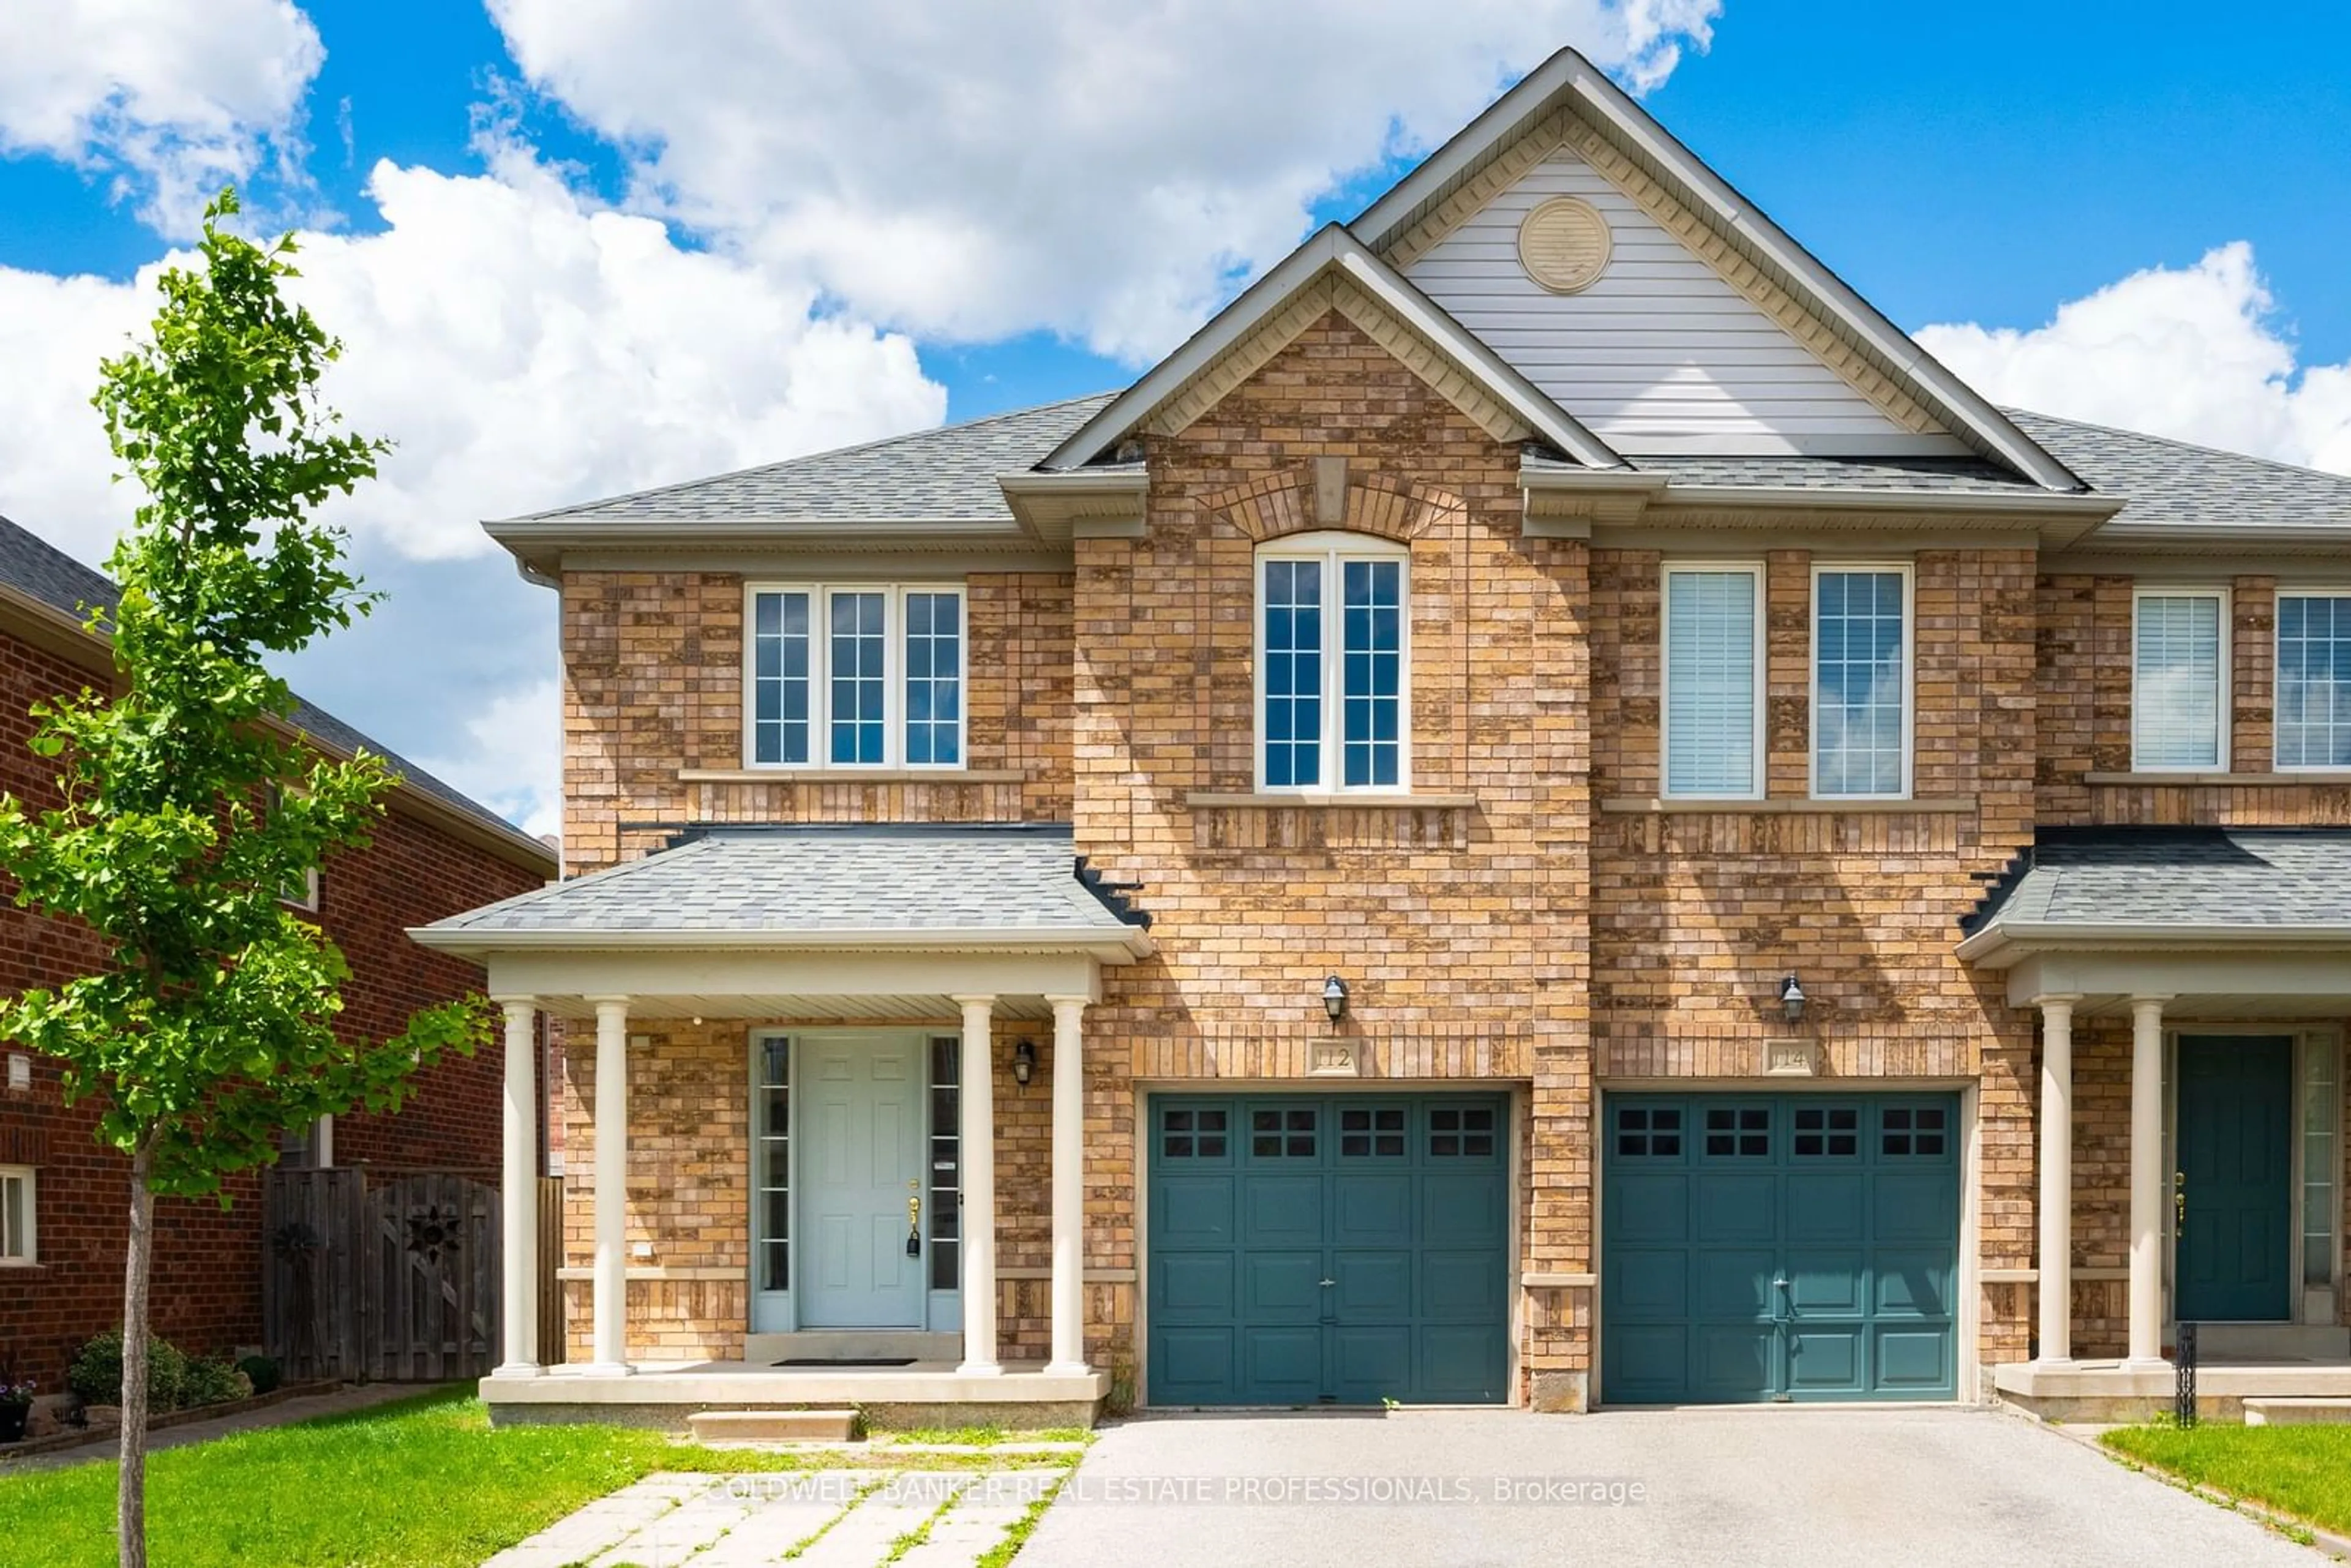 Home with brick exterior material for 112 Edward Jeffreys Ave, Markham Ontario L6E 1W1